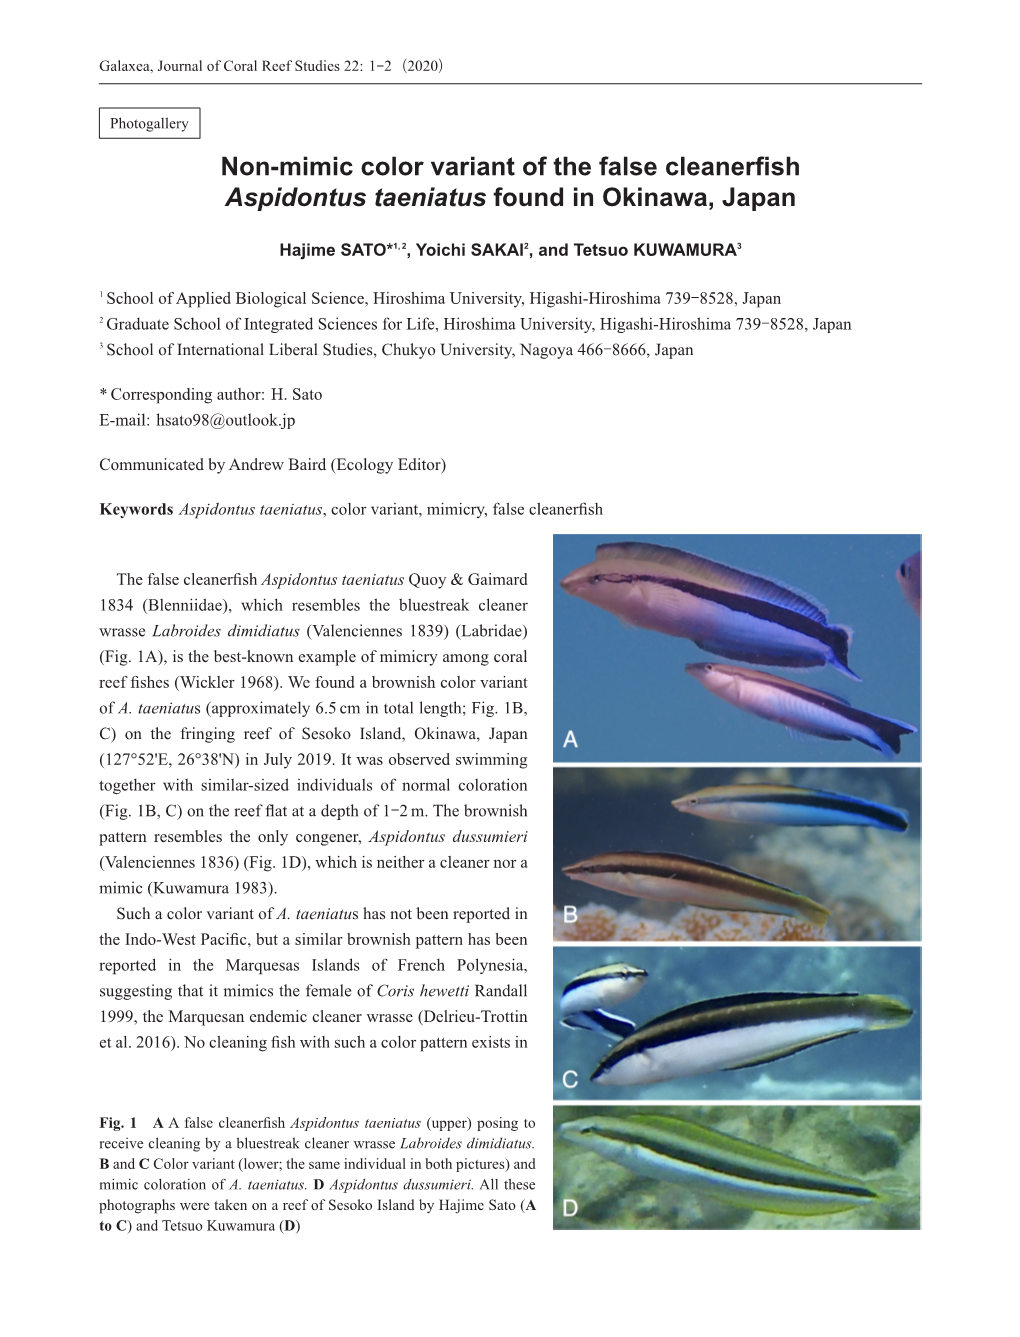 Non-Mimic Color Variant of the False Cleanerfish Aspidontus Taeniatus Found in Okinawa, Japan